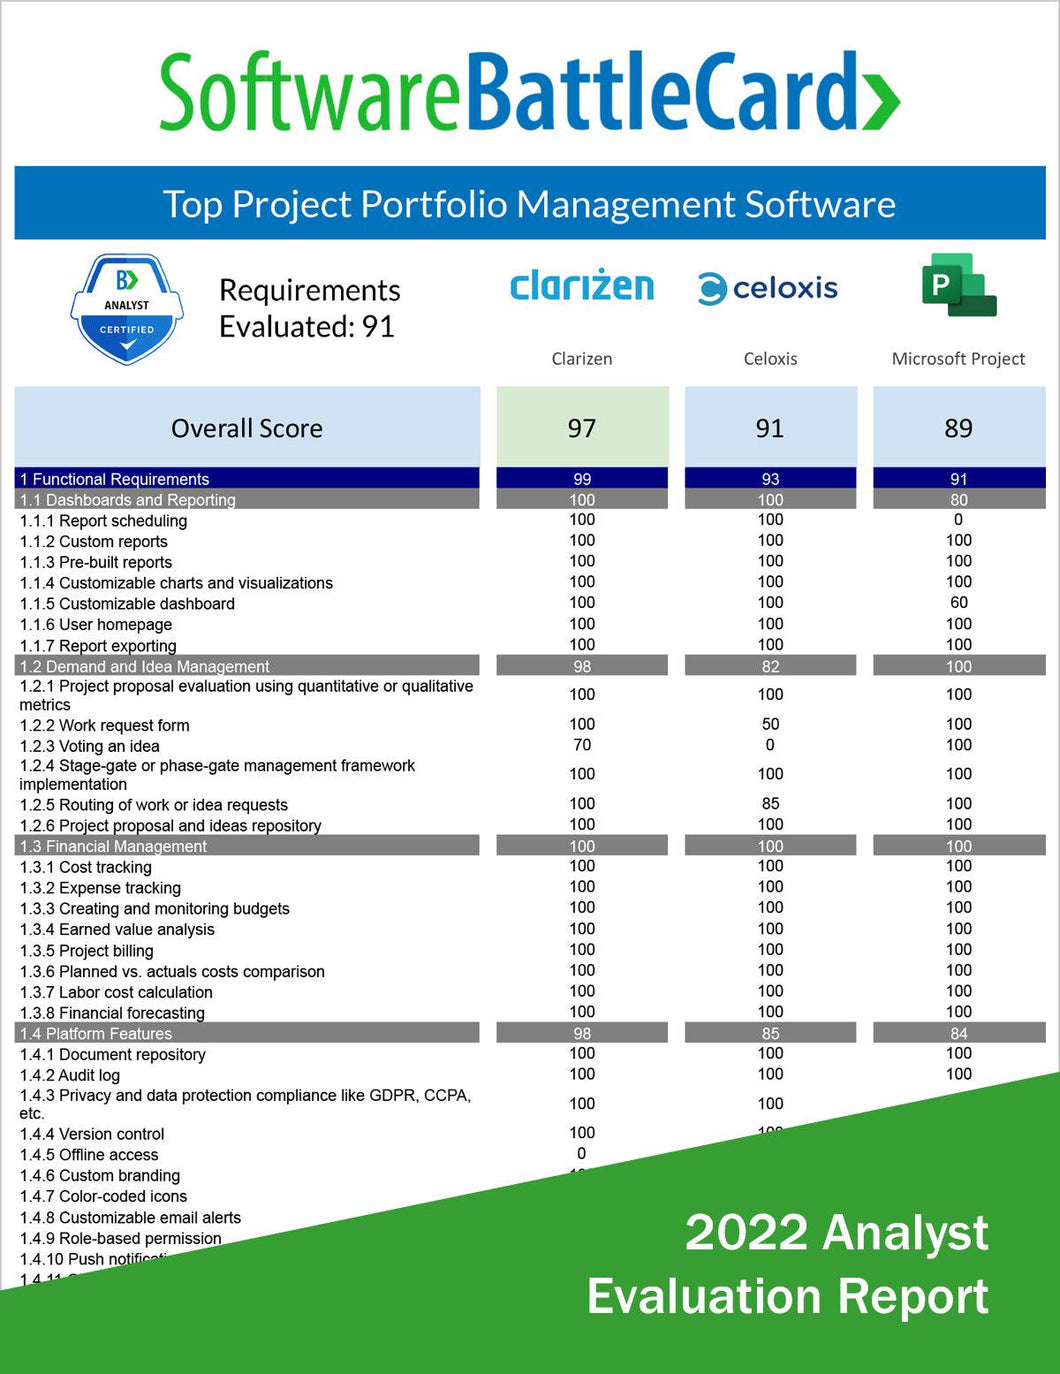 Top Project Portfolio Management Software Battlecard: Clarizen vs. Celoxis vs. Microsoft Project